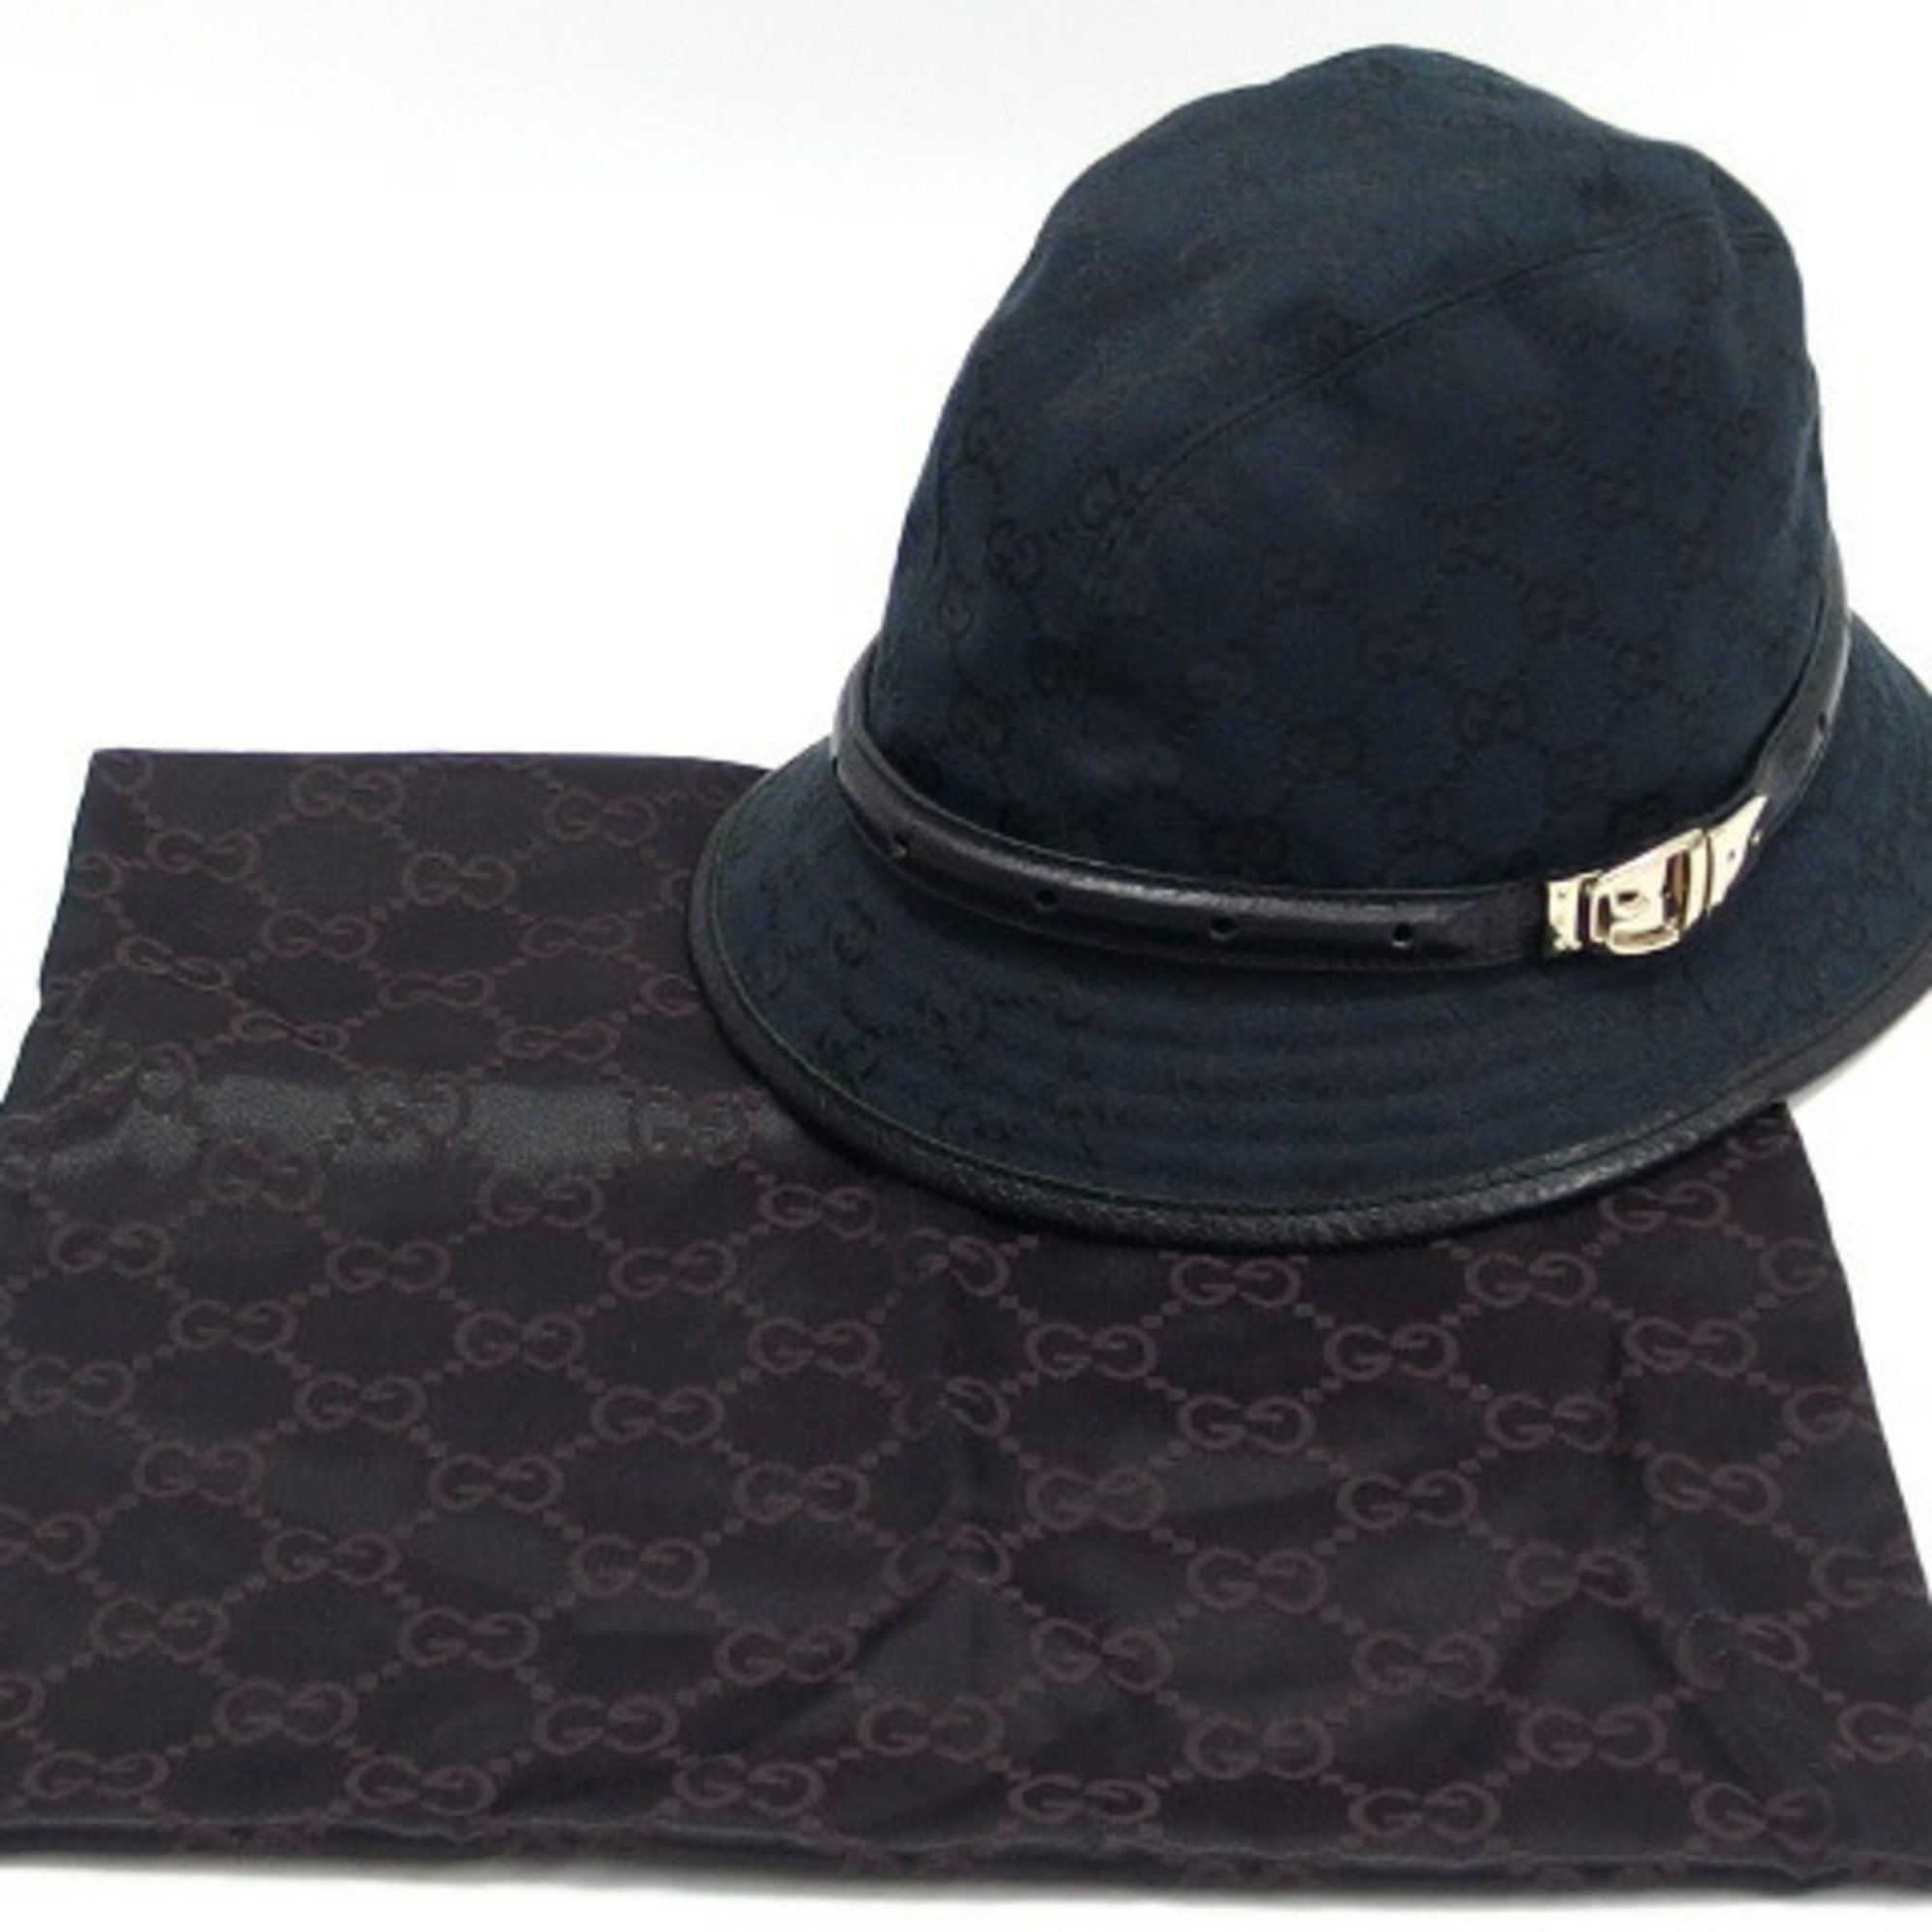 Gucci GG canvas bucket hat with belt design in black